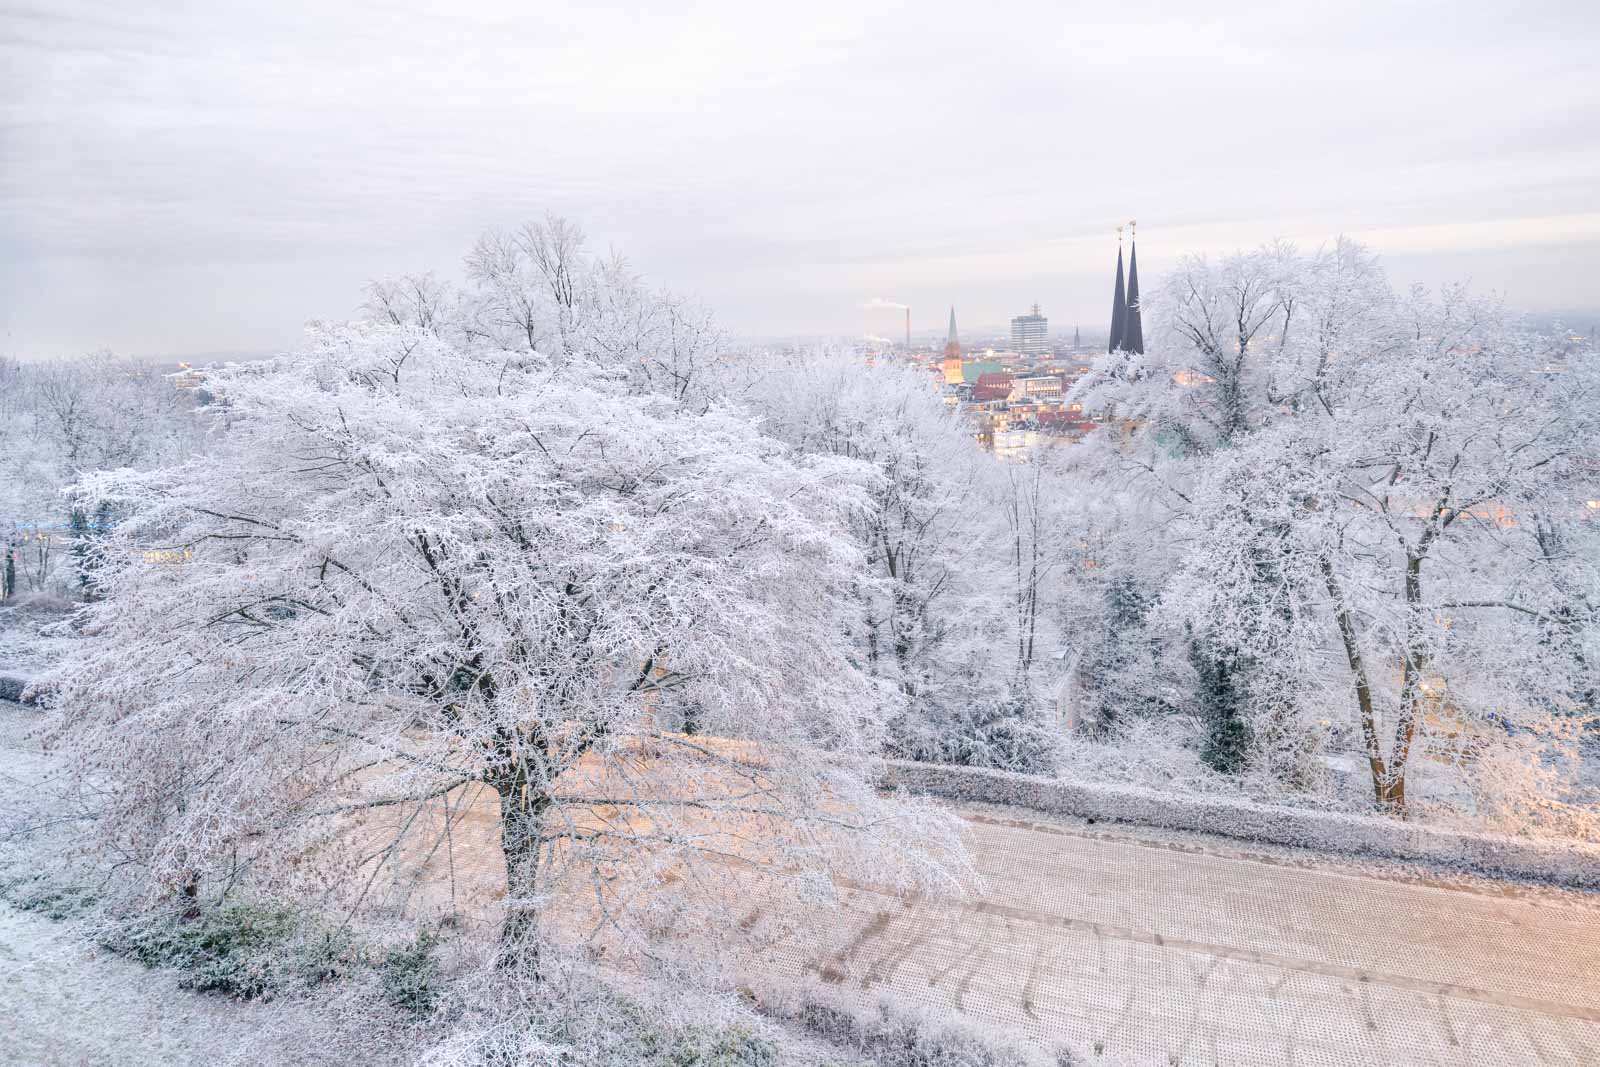 White city in December 2021 (Bielefeld, Germany).